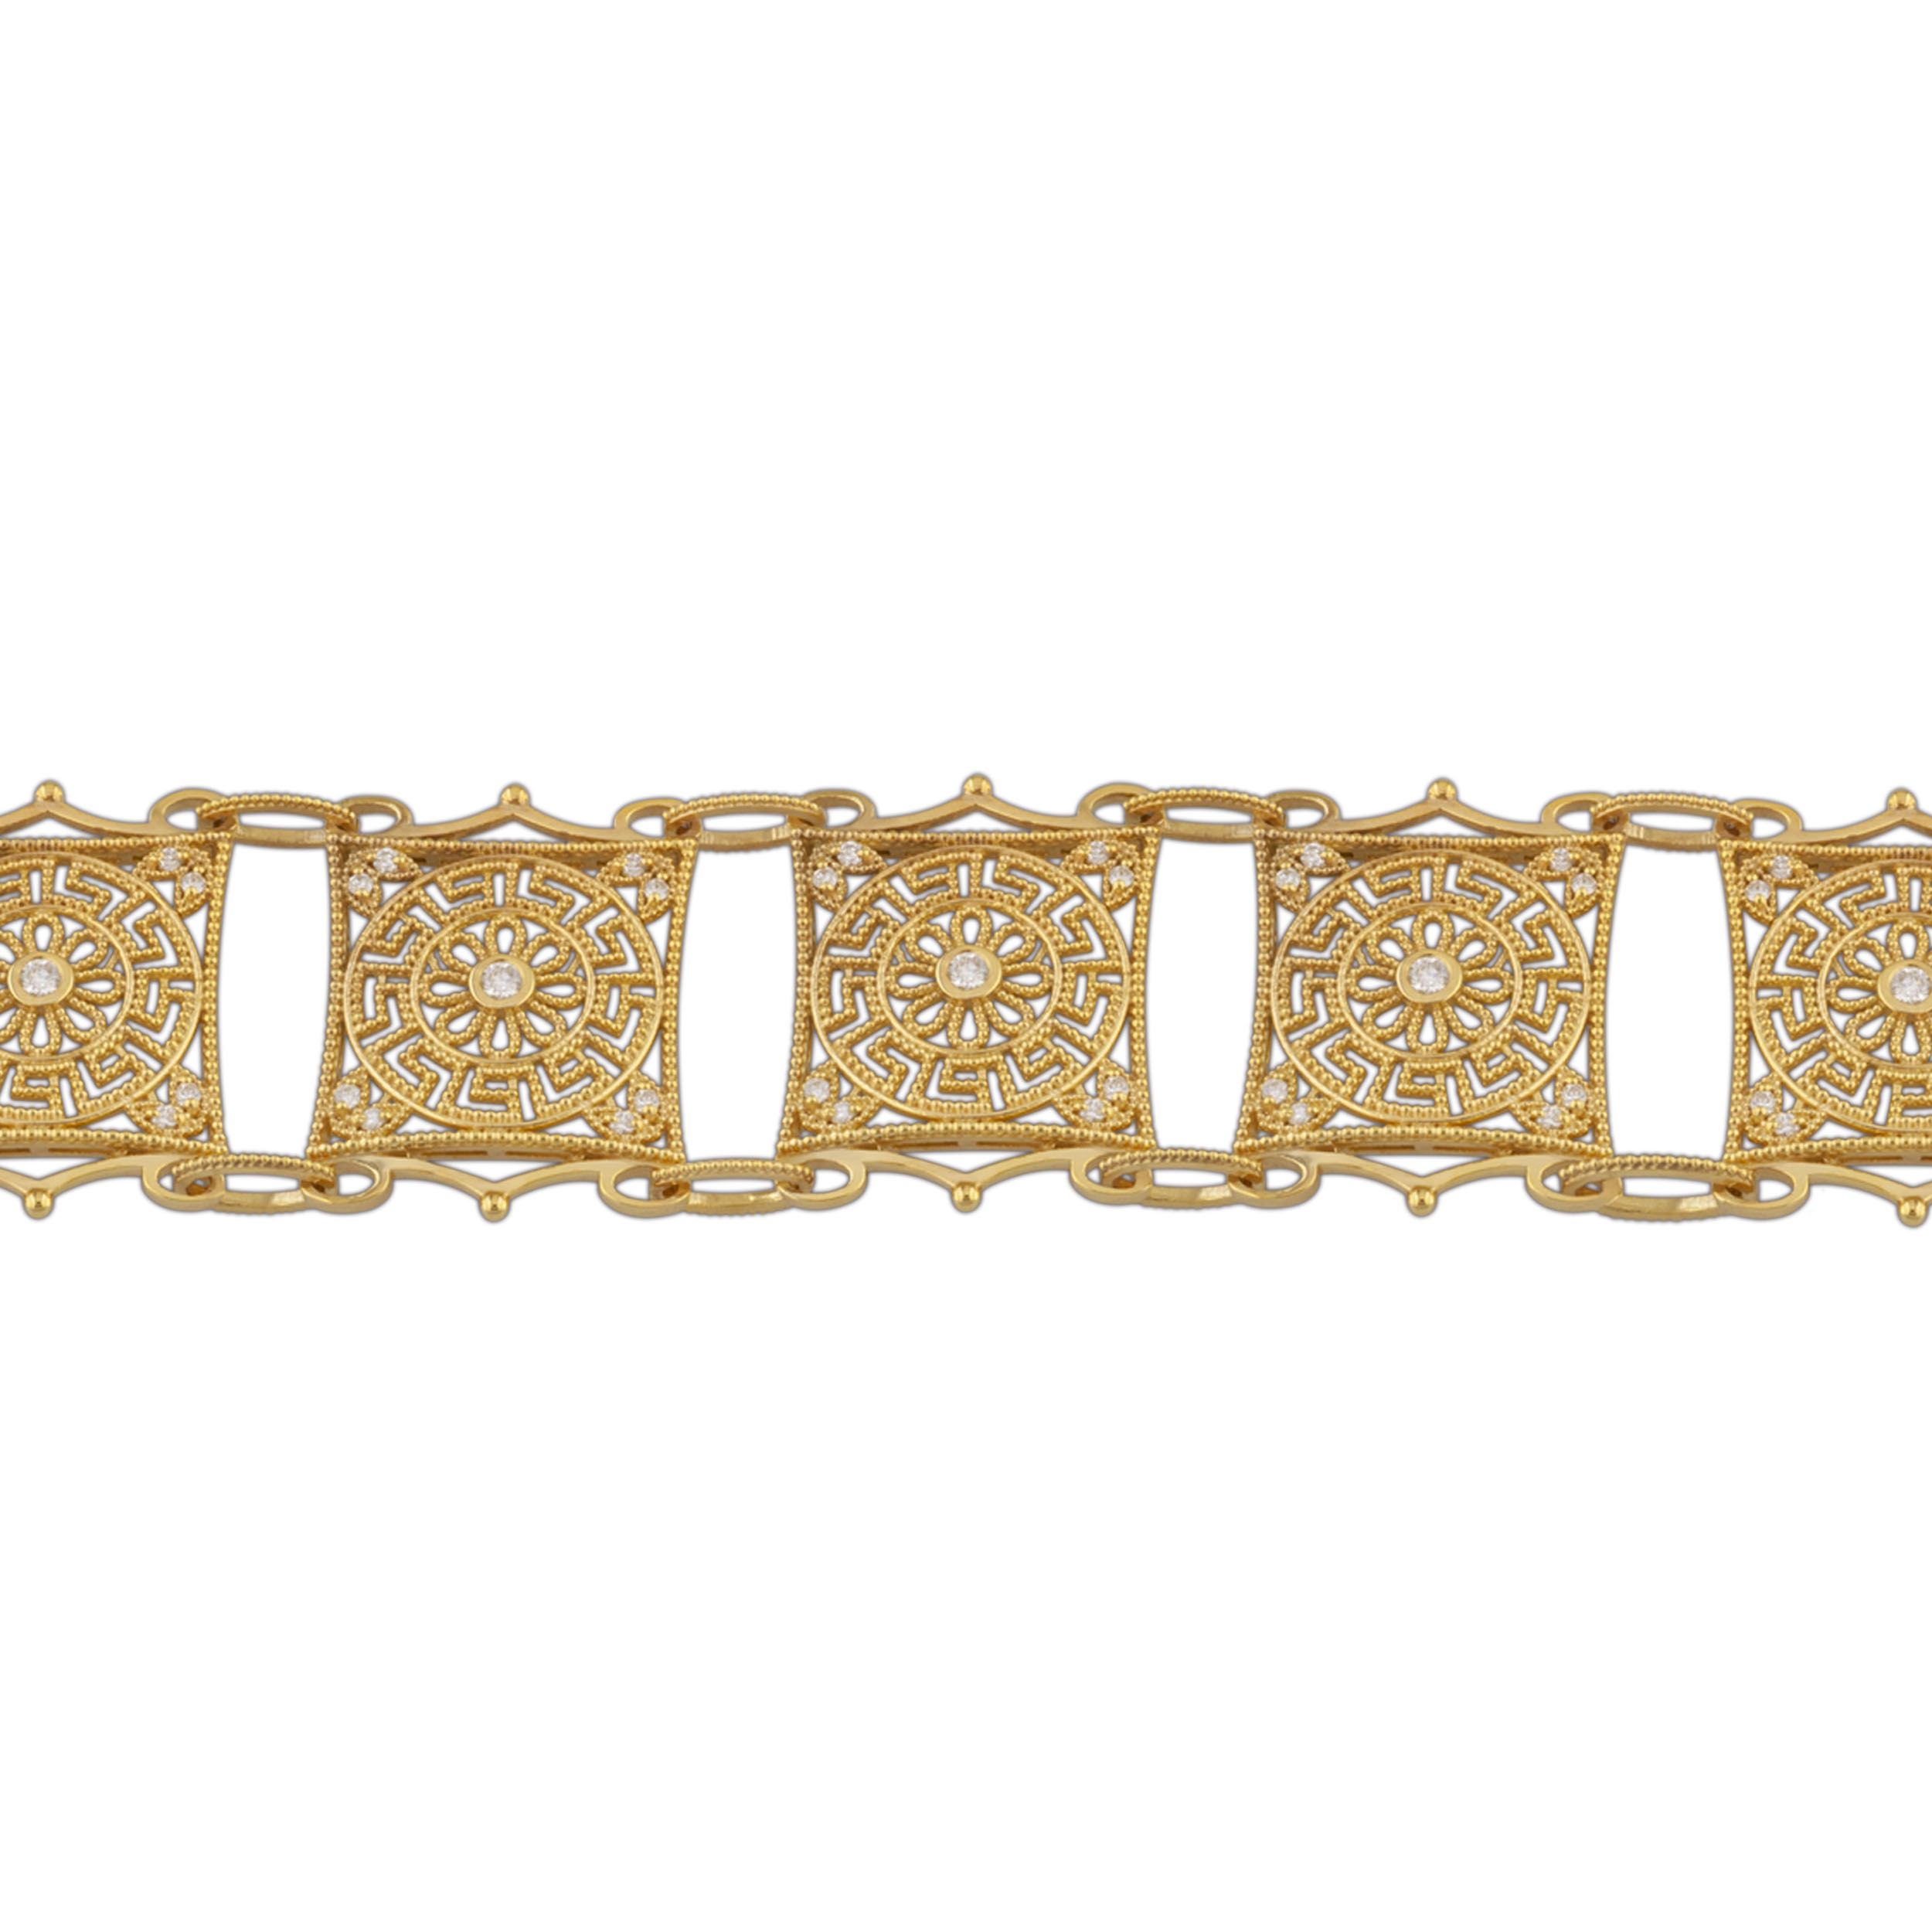 gold flower bracelet with diamonds